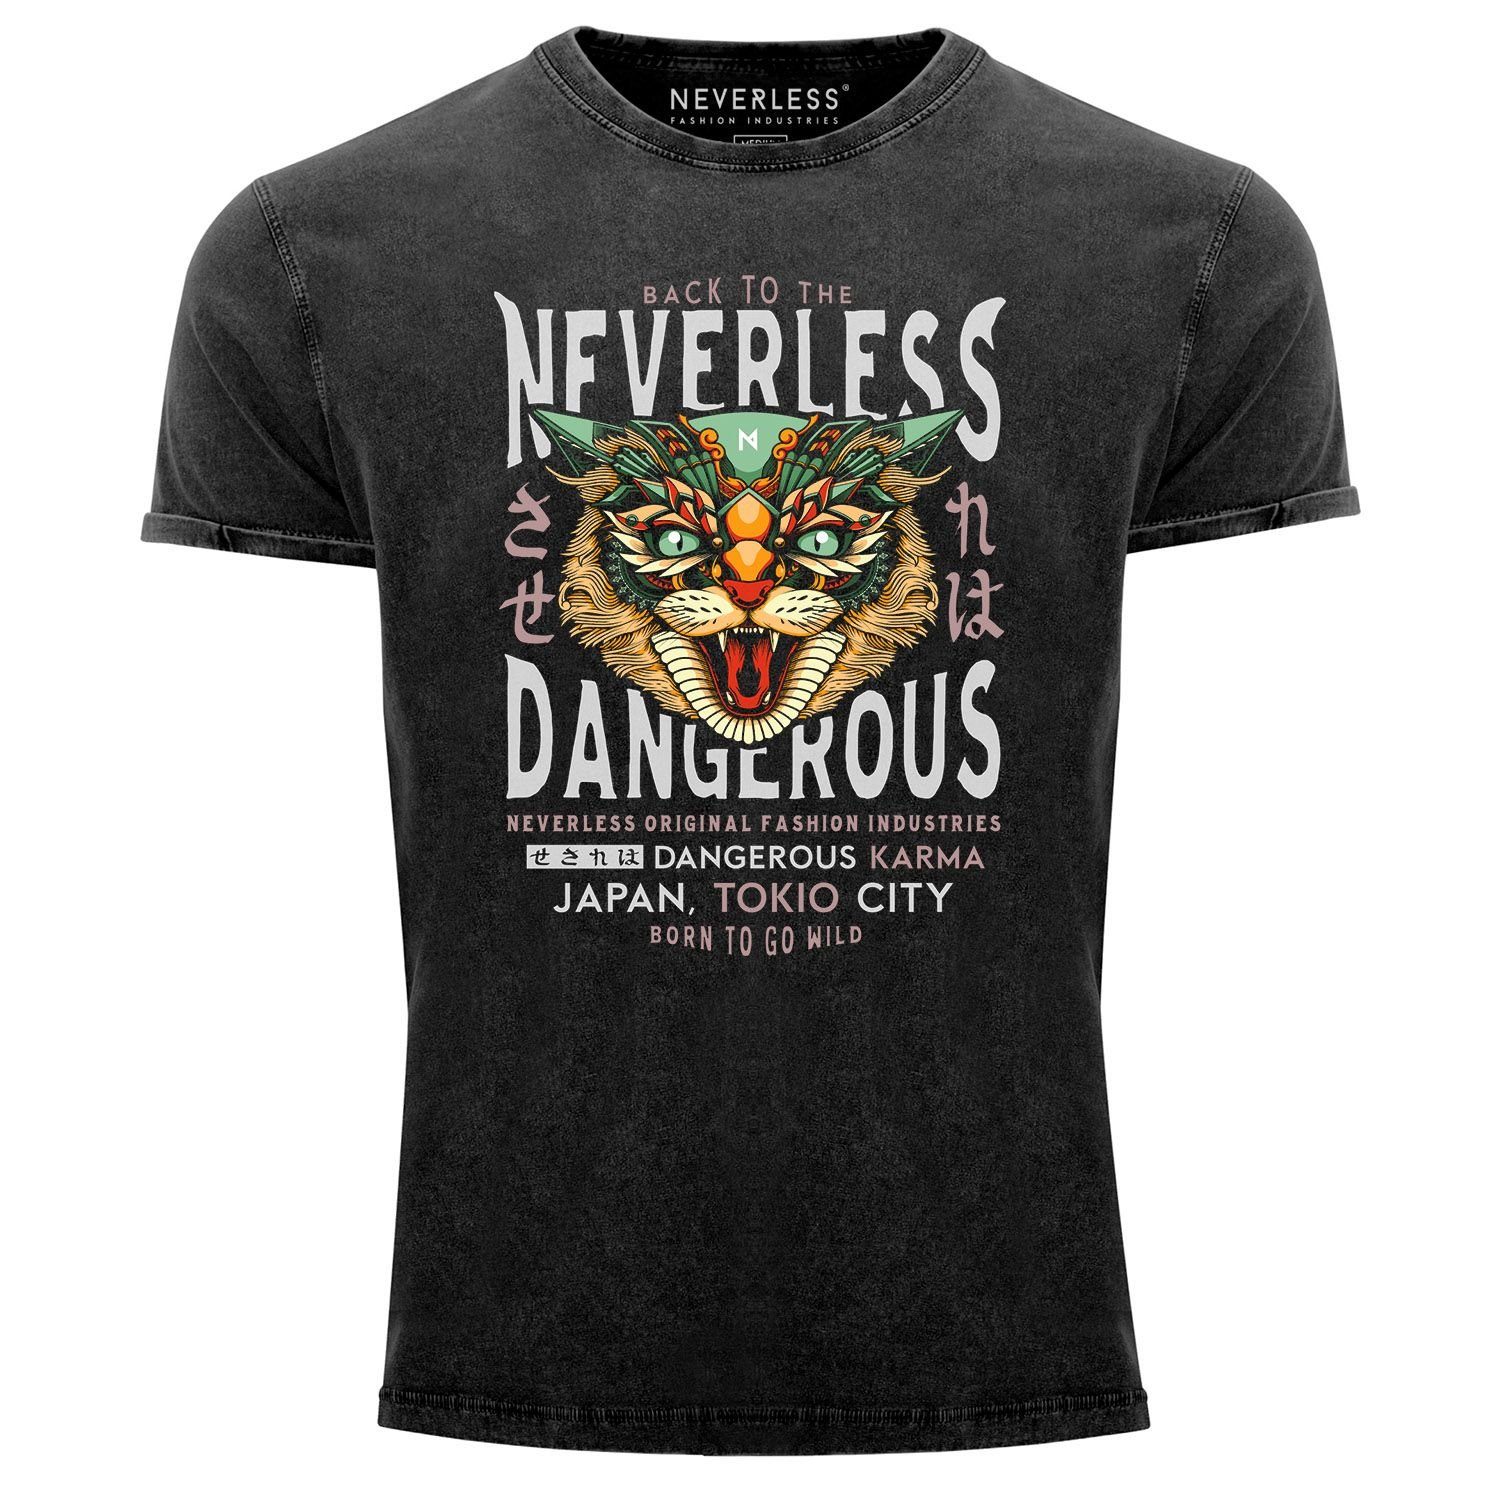 Neverless Print-Shirt Neverless® Herren T-Shirt Vintage Shirt Printshirt Design Print Katzenkopf Dangerous Cat Motiv Japan Tokio City Schriftzug Fashion Streetstyle Used Look Slim Fit mit Print